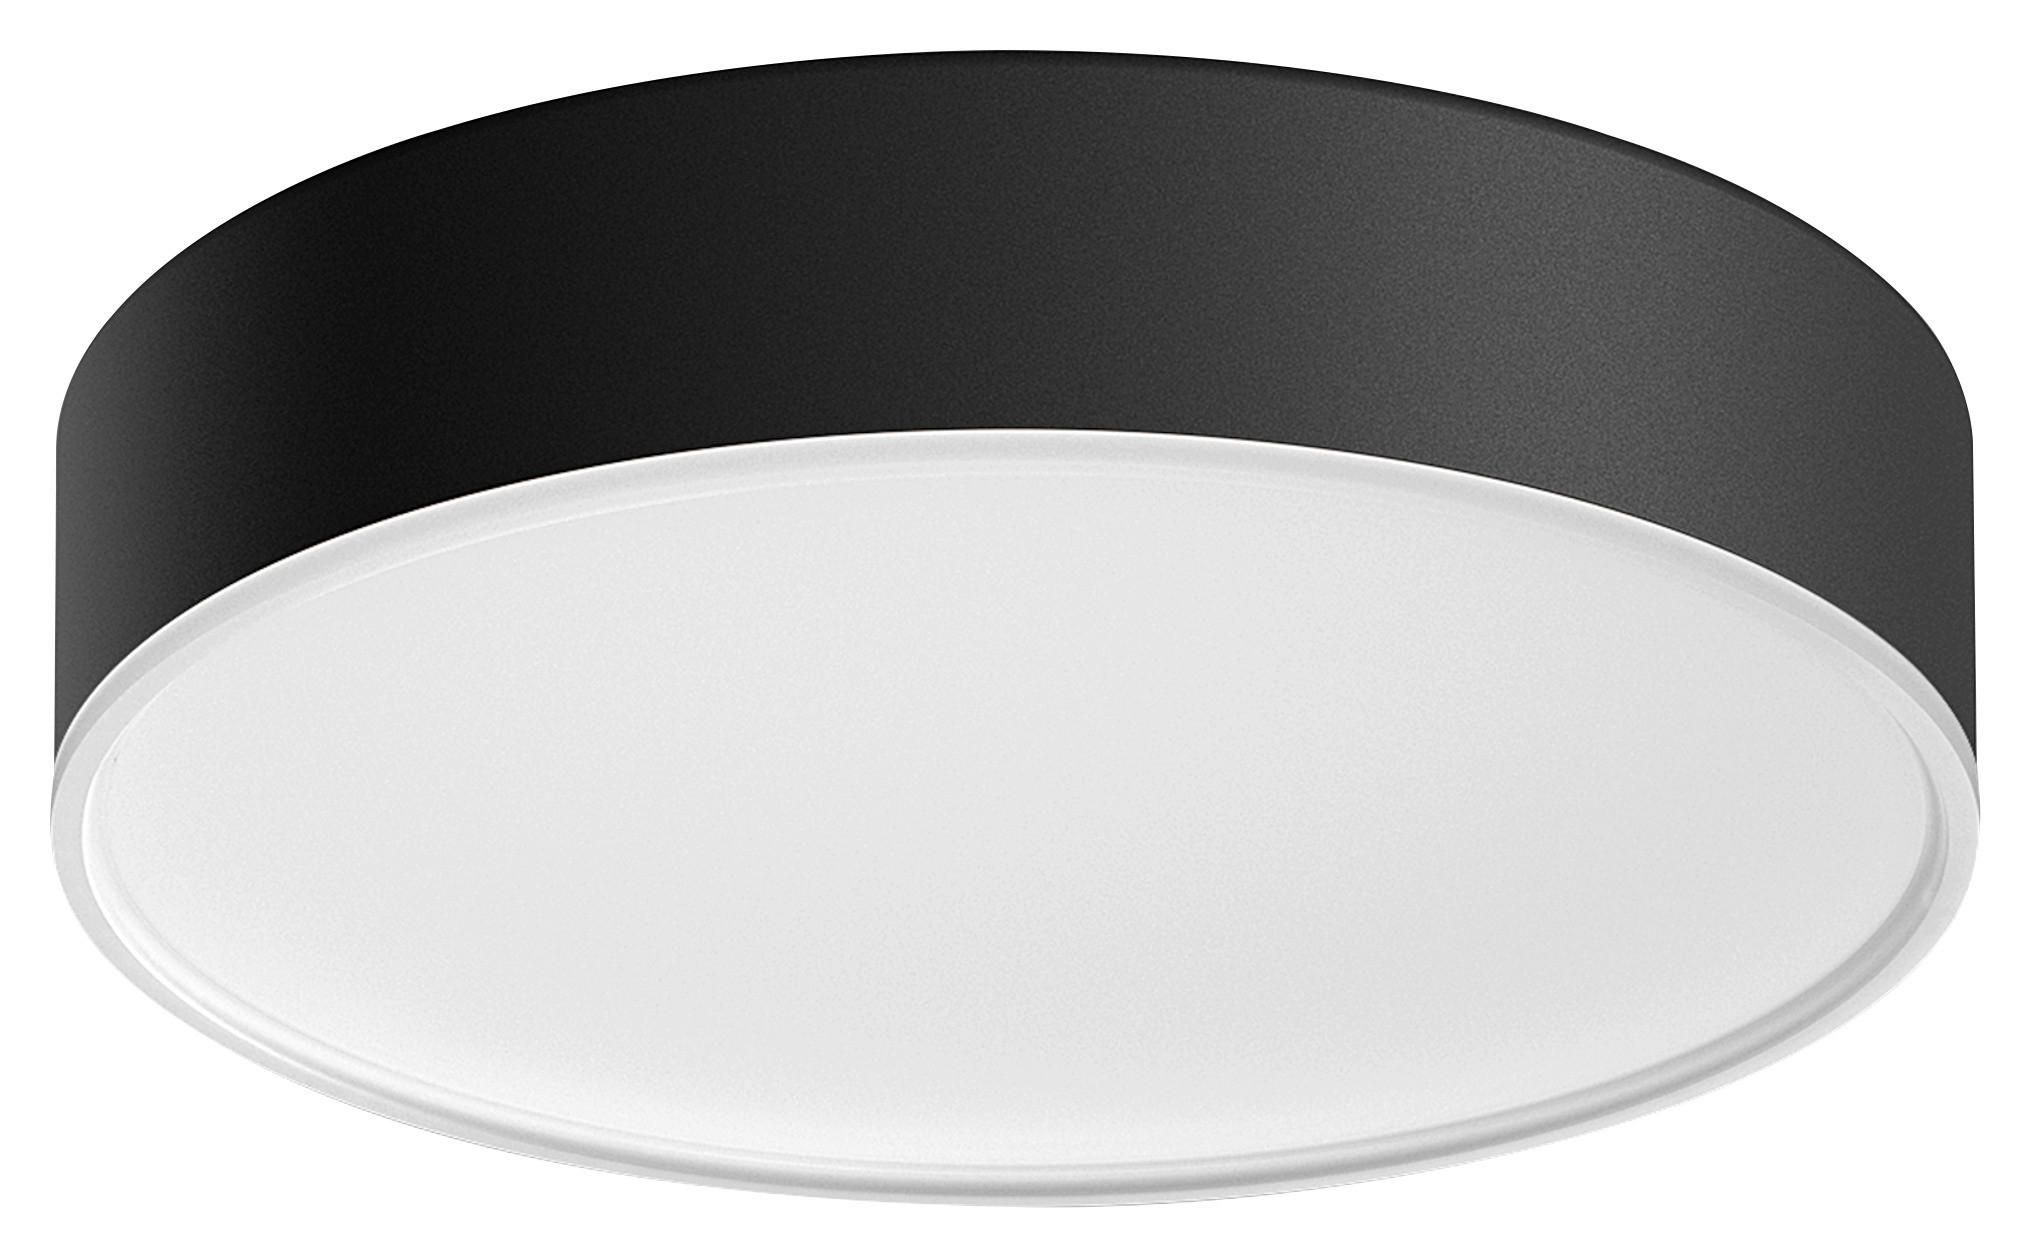 LED-DECKENLEUCHTE White Ambiance Enrave S 26,1/6,6 cm   - Schwarz, Design, Metall (26,1/6,6cm) - Philips HUE